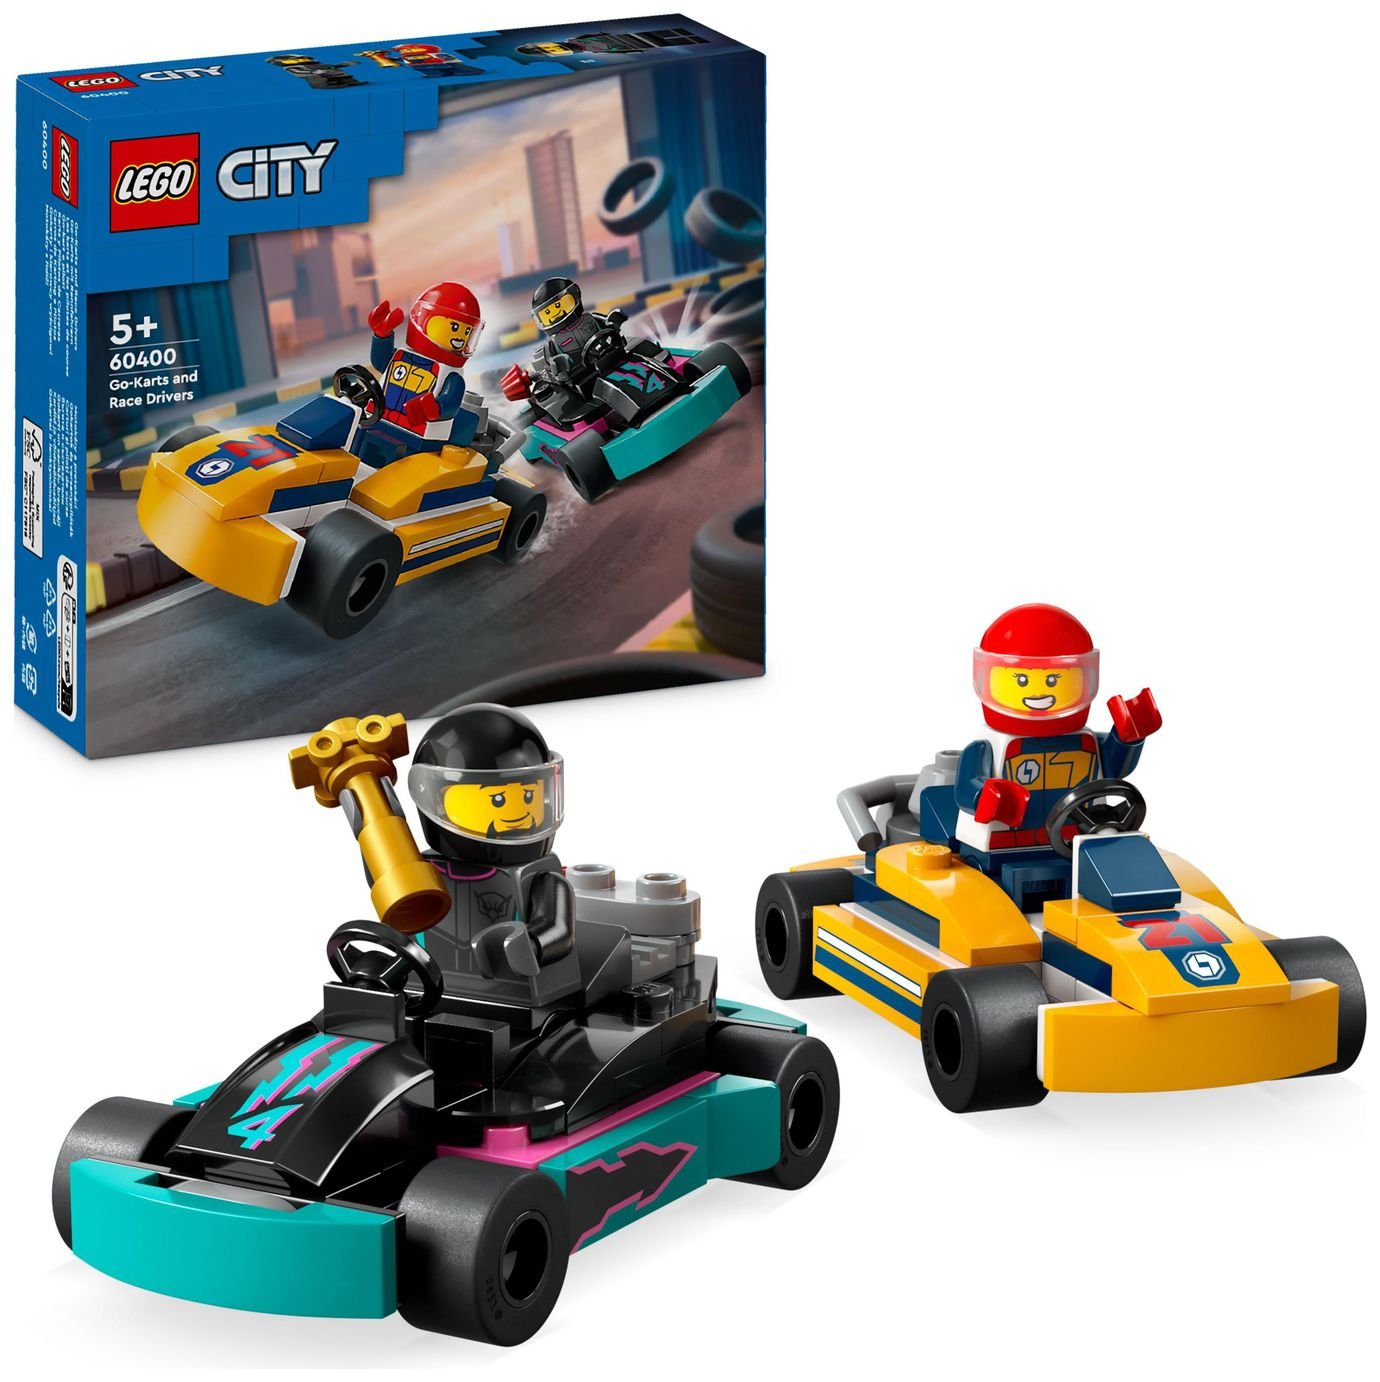 LEGO City Go-Karts and Race Drivers Vehicle Toys Set 60400